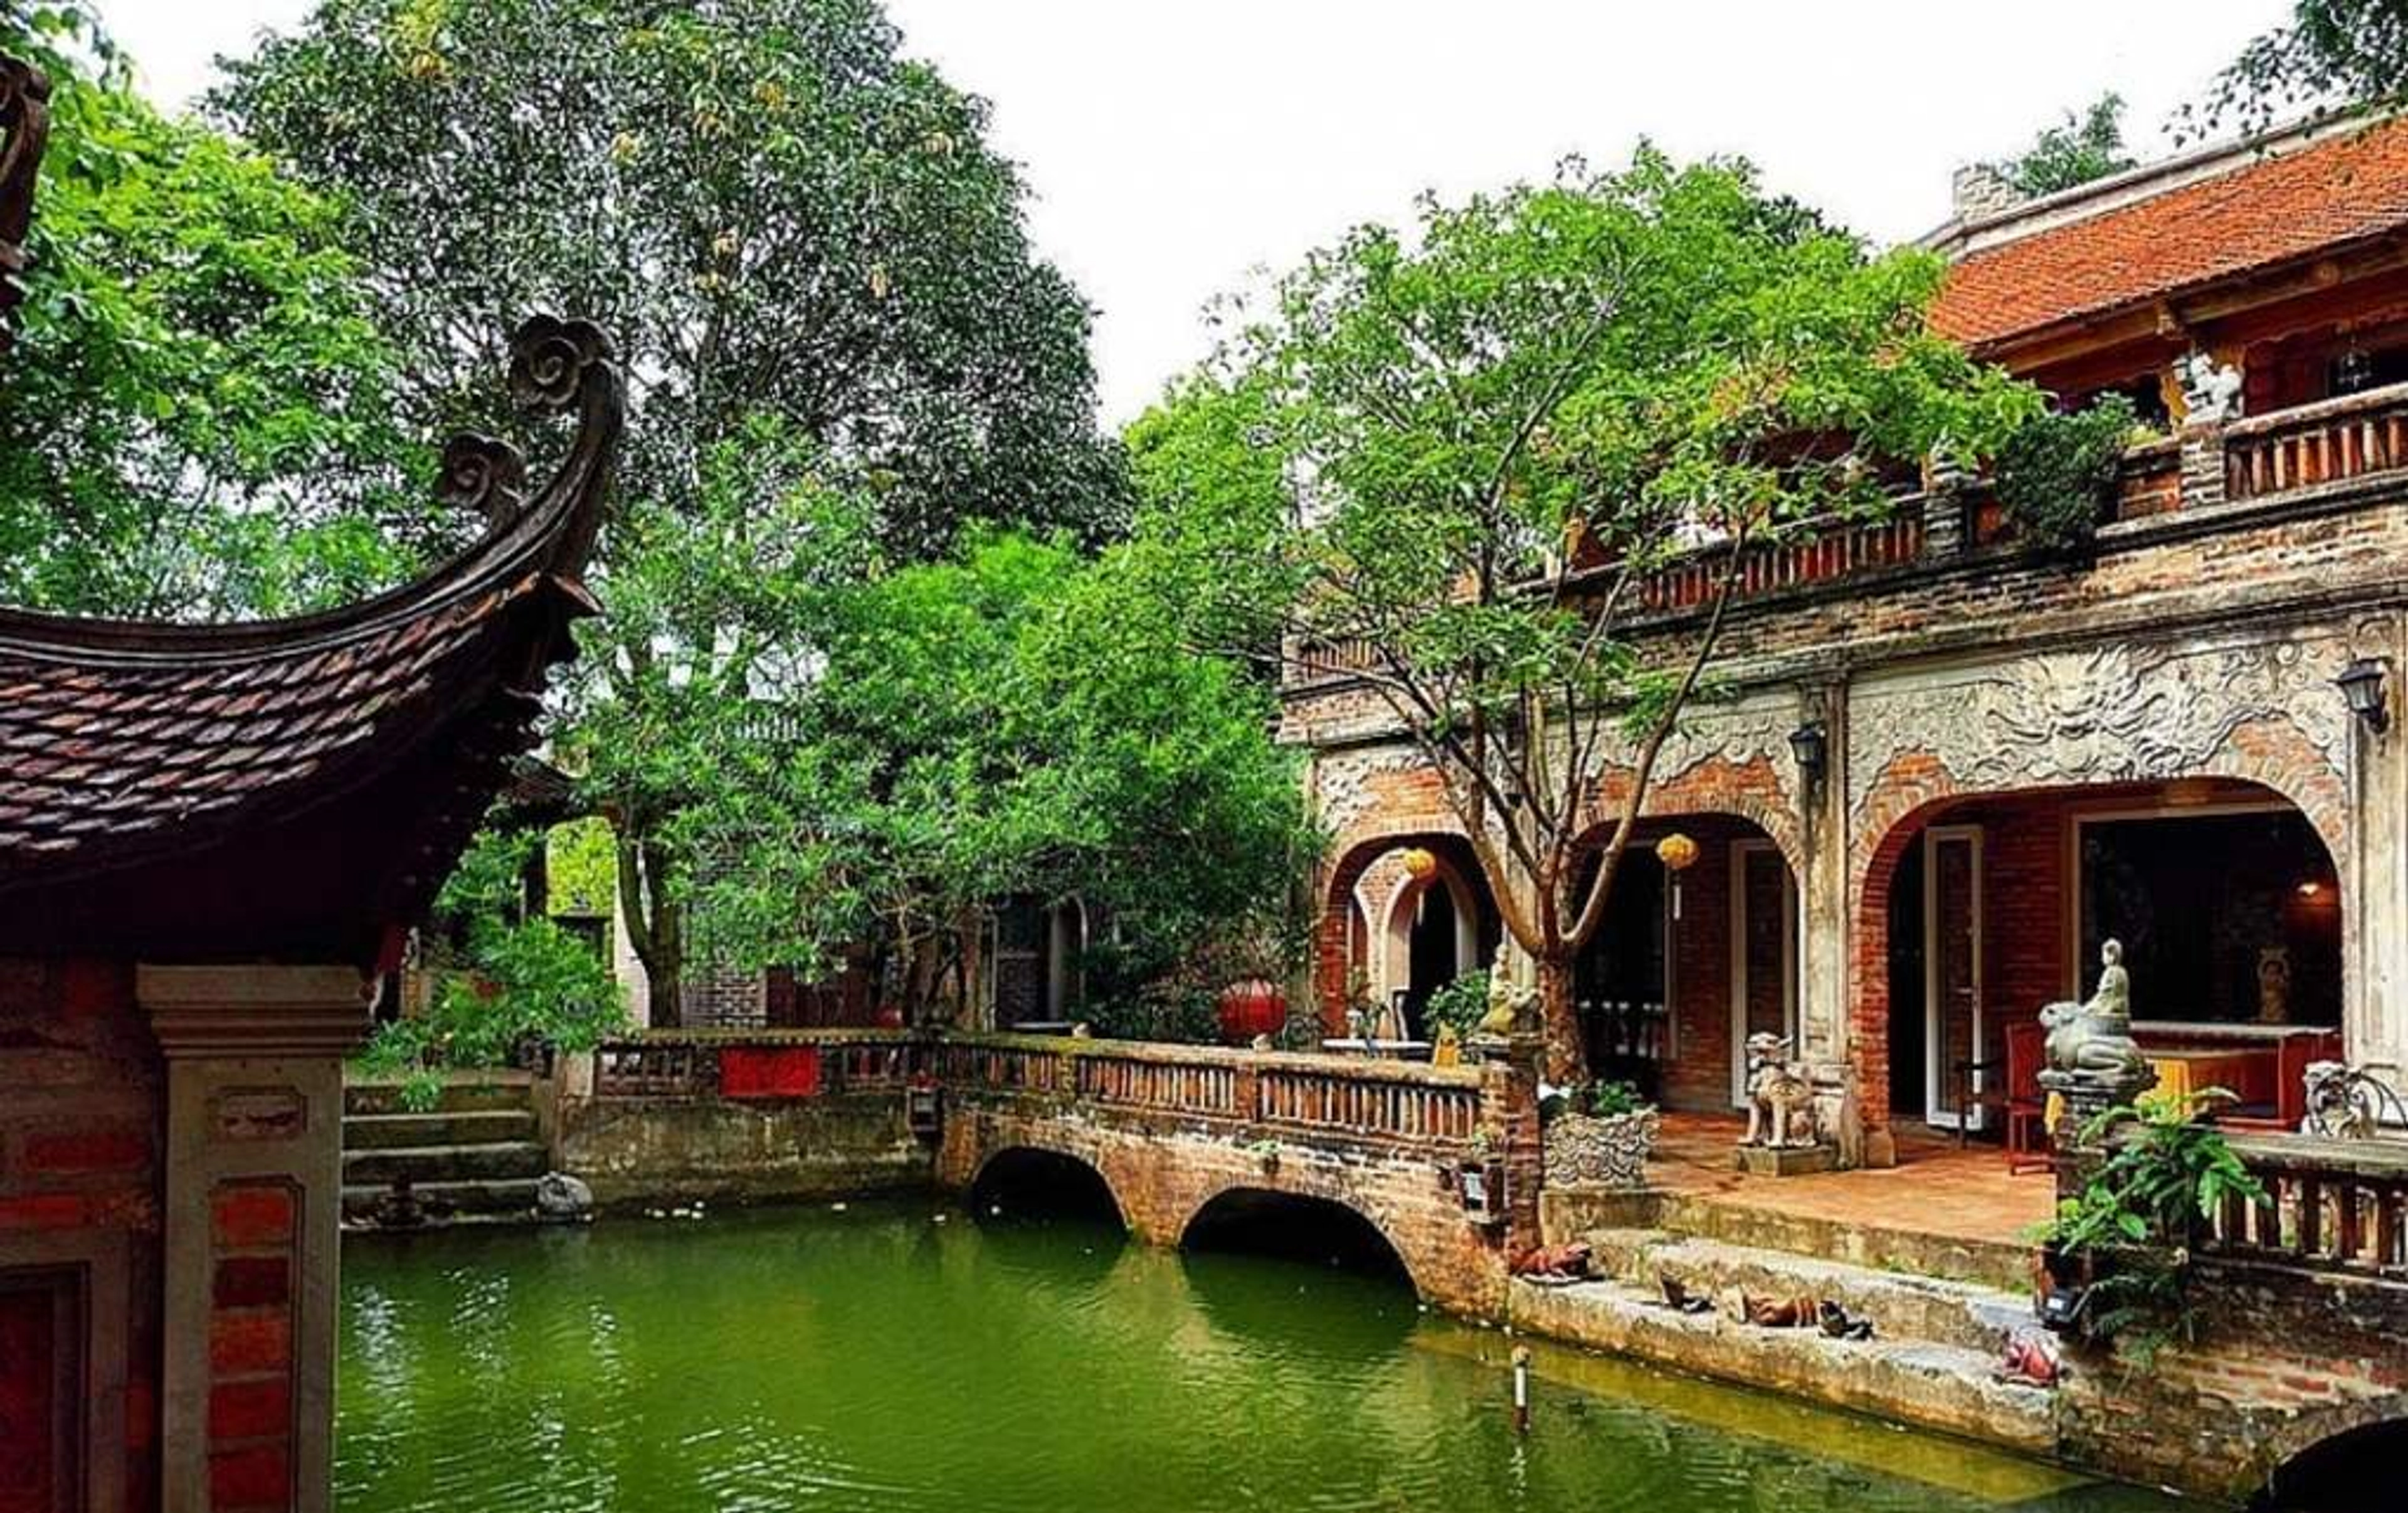 Viet Phu Thanh Chuong - An Ideal Tourist Destination for Lovers of Vietnamese Culture